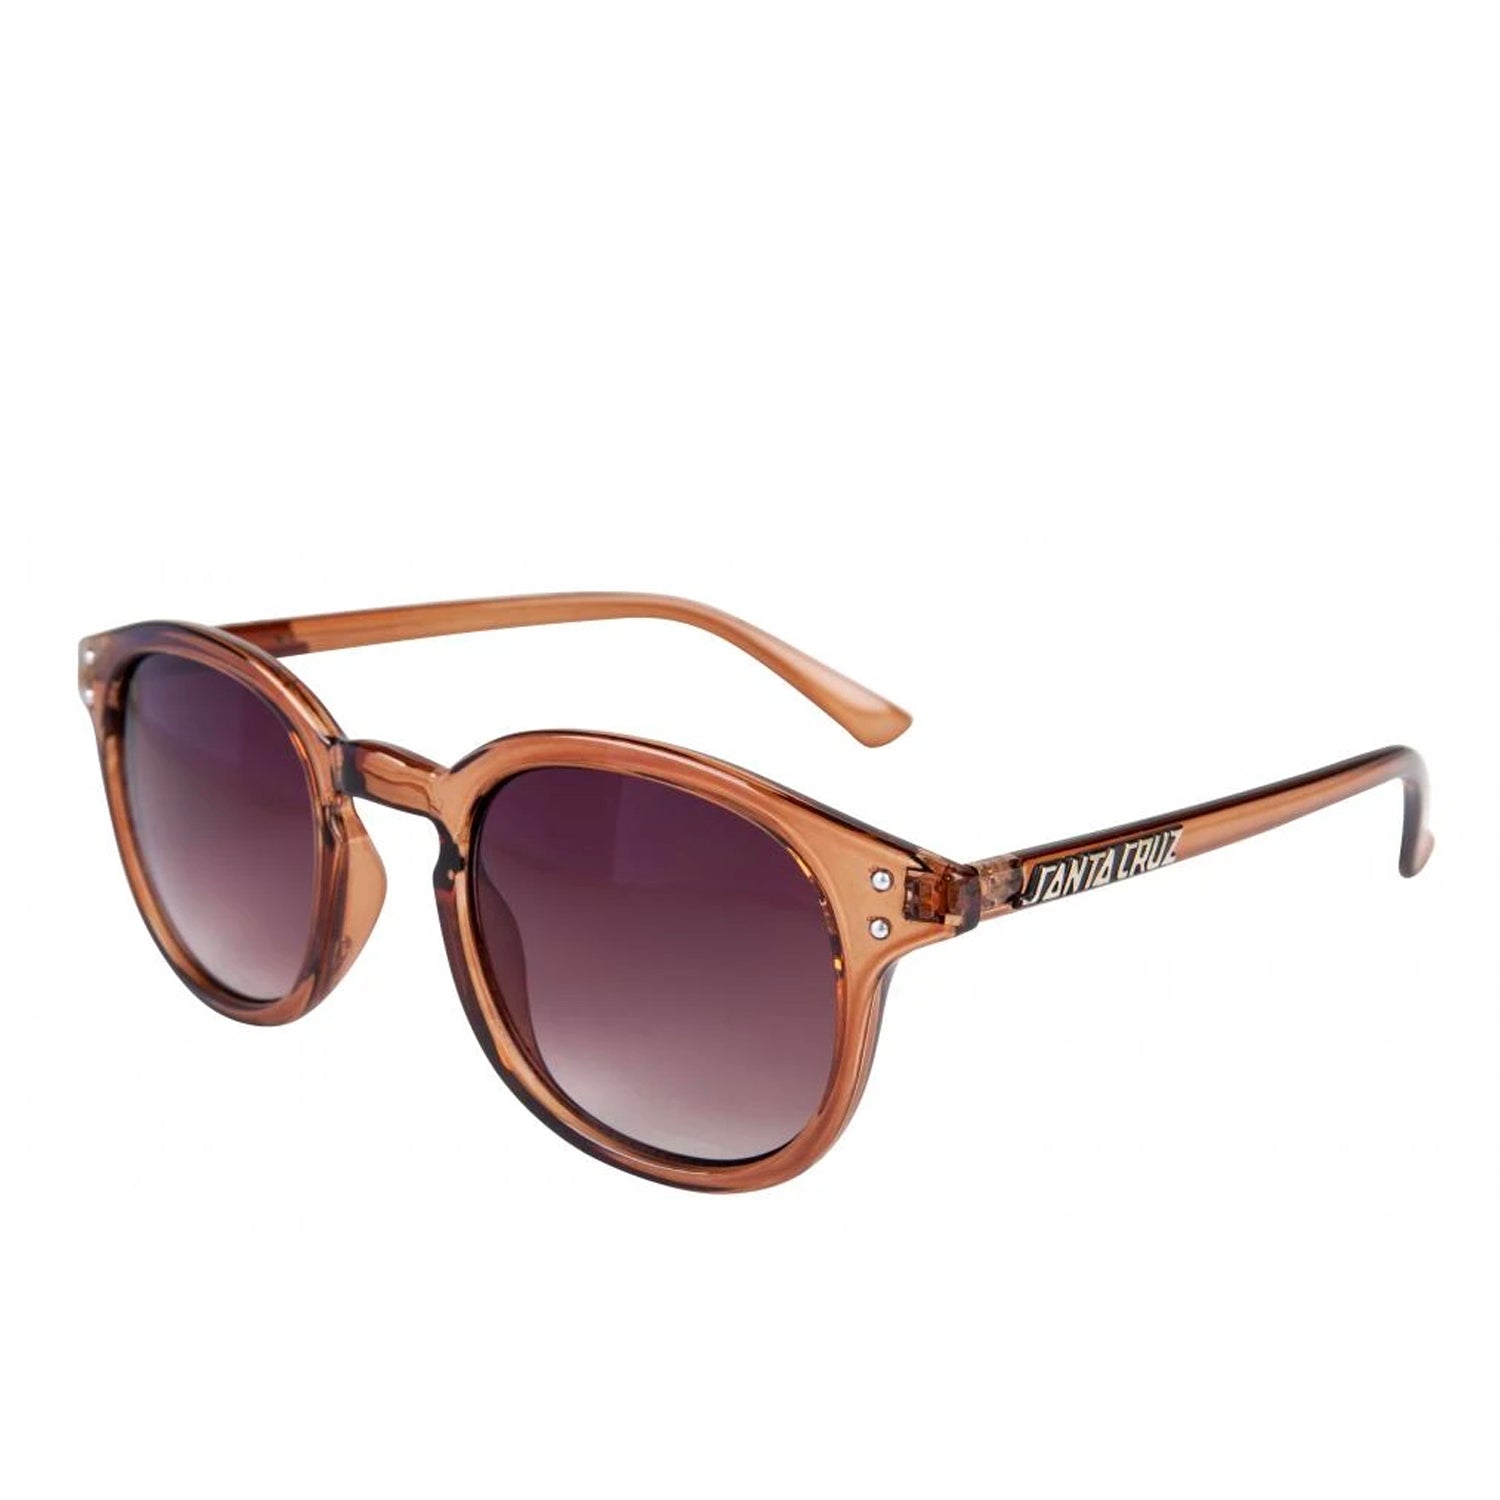 Santa Cruz Watson Sunglasses - Chocolate - Prime Delux Store